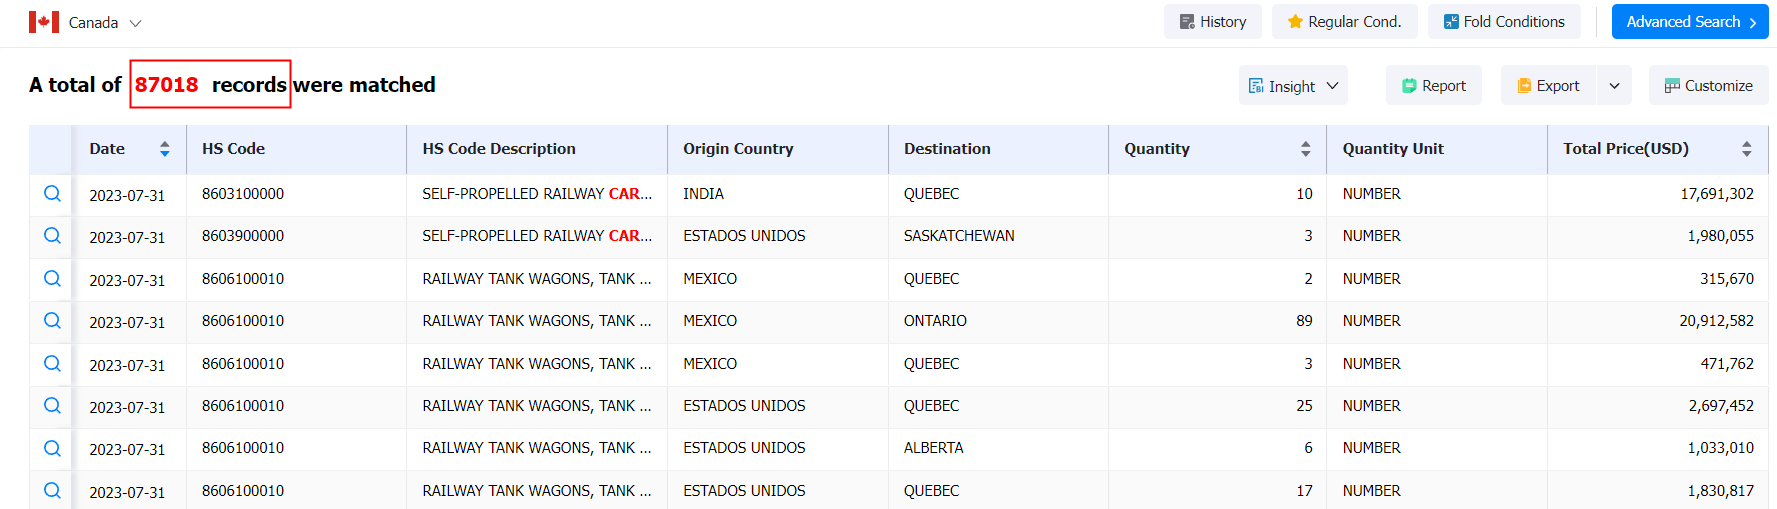 exporters database,canada exporters database,canada exporters database data